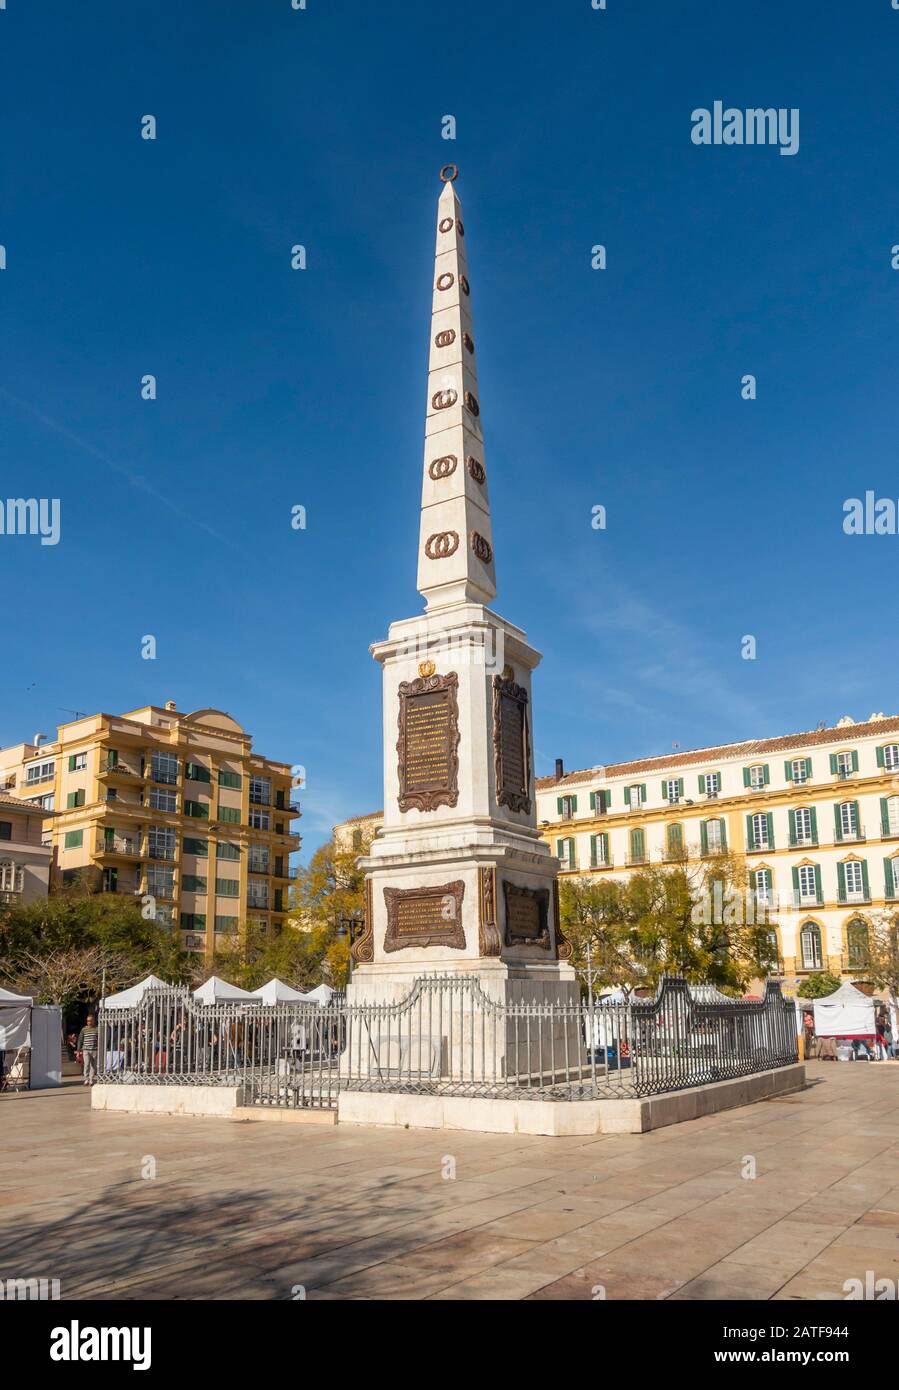 Malaga Spain. Plaza de la Merced (Mercy Square) with the Monument to Torrijos, public square, Malaga, Andalucia, Spain. Stock Photo